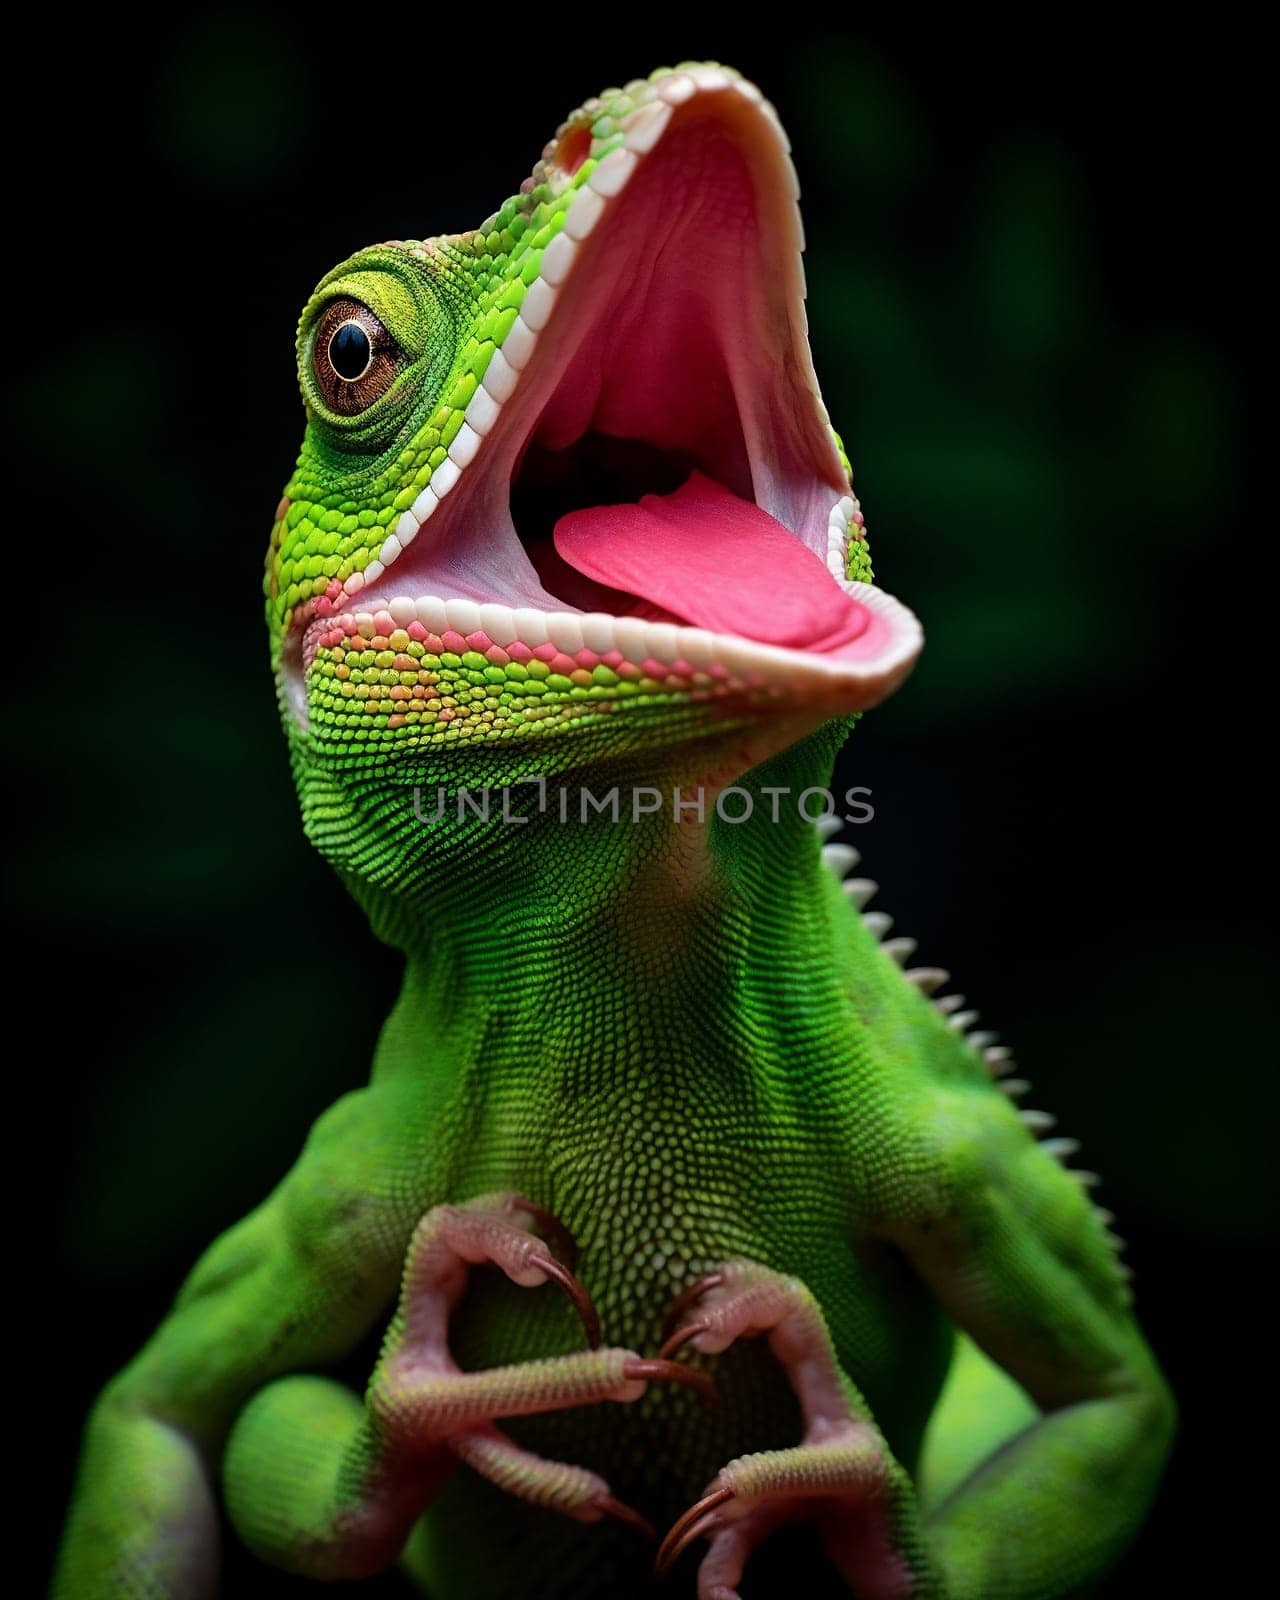 Animal iguana nature pet wildlife green lizard reptile wild dragon by Vichizh